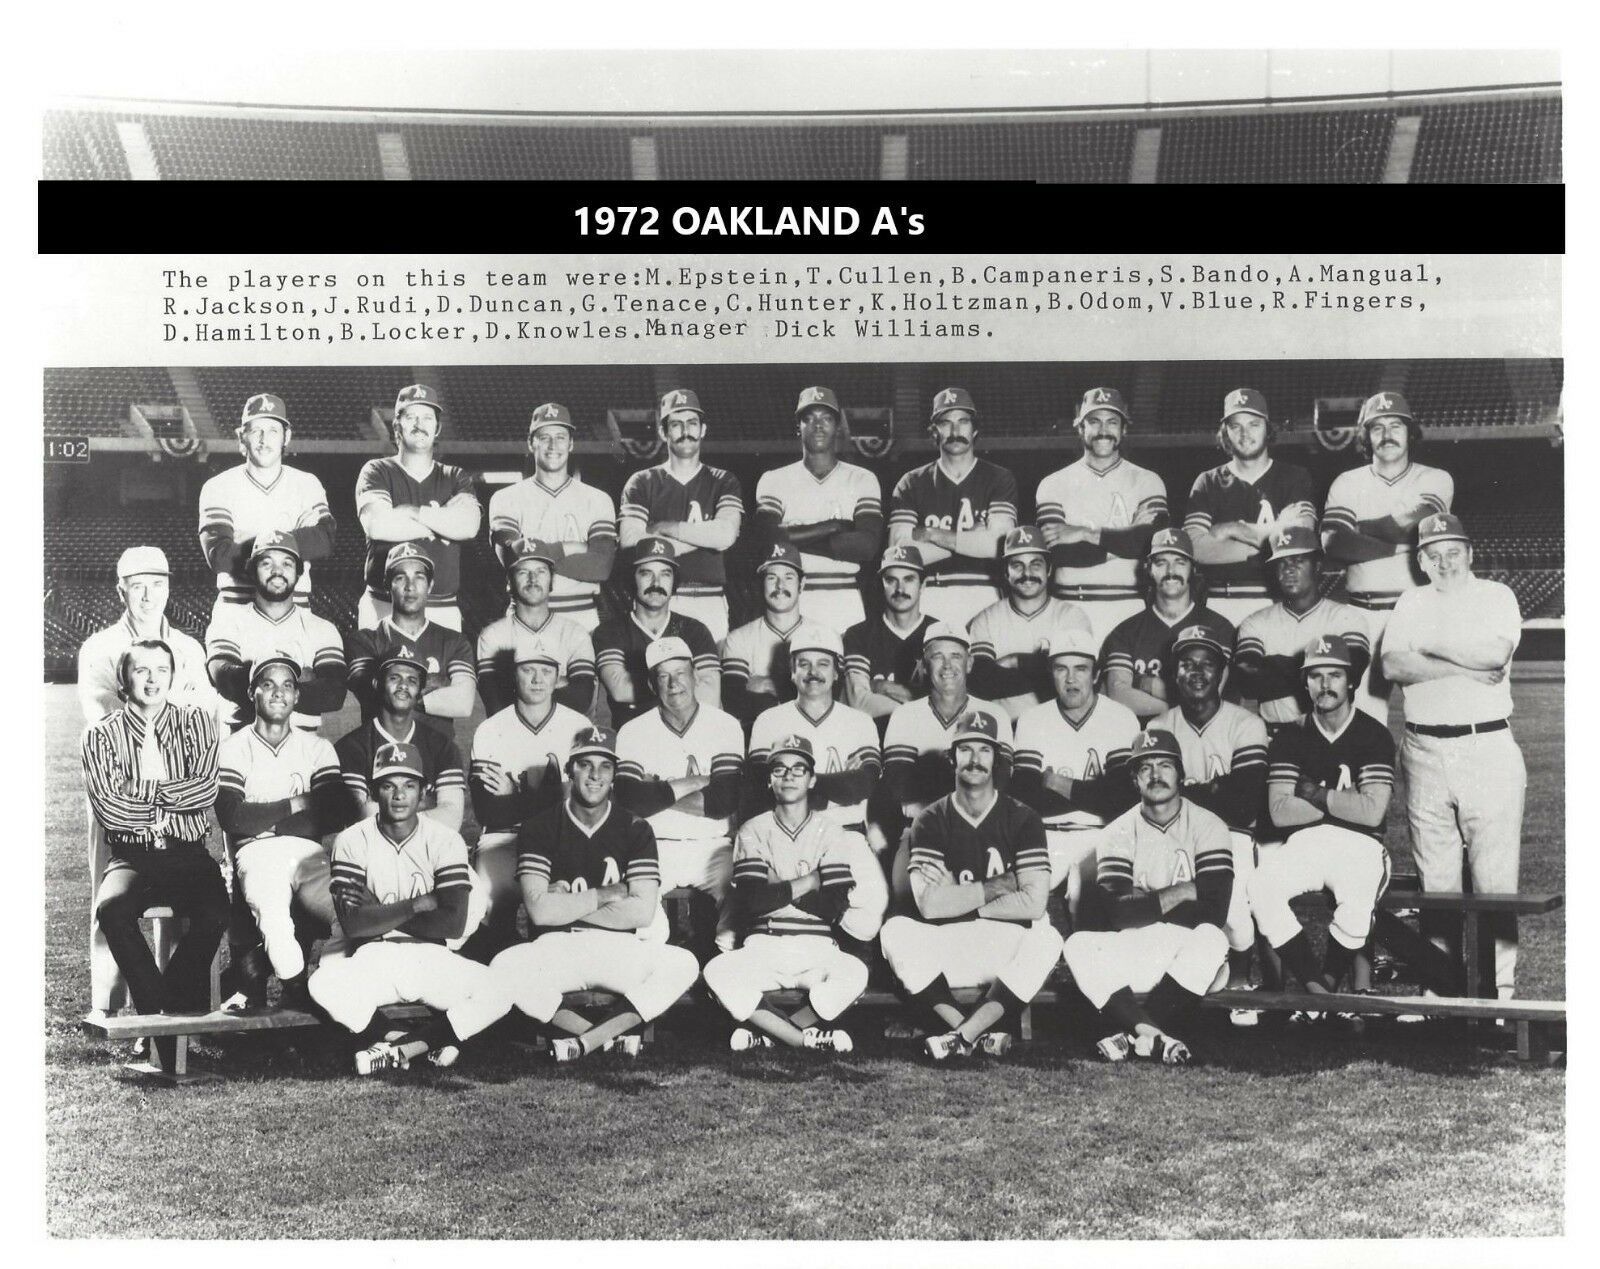 1972 OAKLAND ATHLETICS A's 8X10 TEAM PHOTO MLB BASEBALL PICTURE WORLD CHAMPS - $4.94